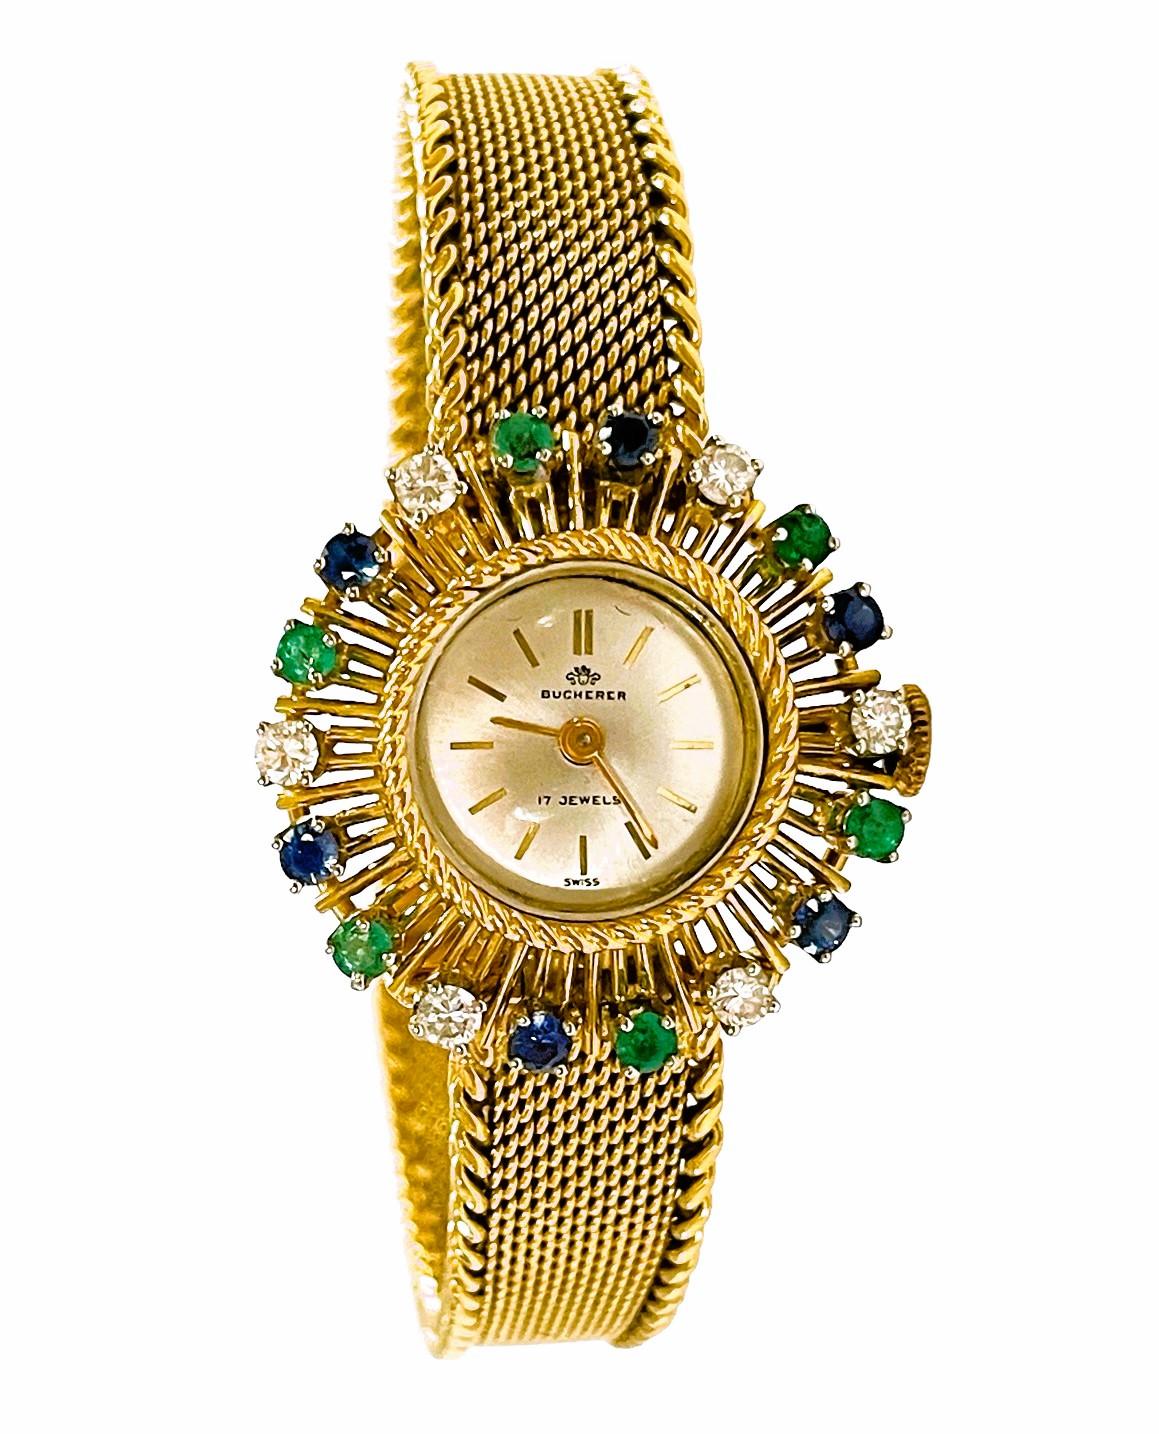 18k Bucherer Quartz Watch with Diamonds, Sapphires & Emeralds with GIA Appraisal 6